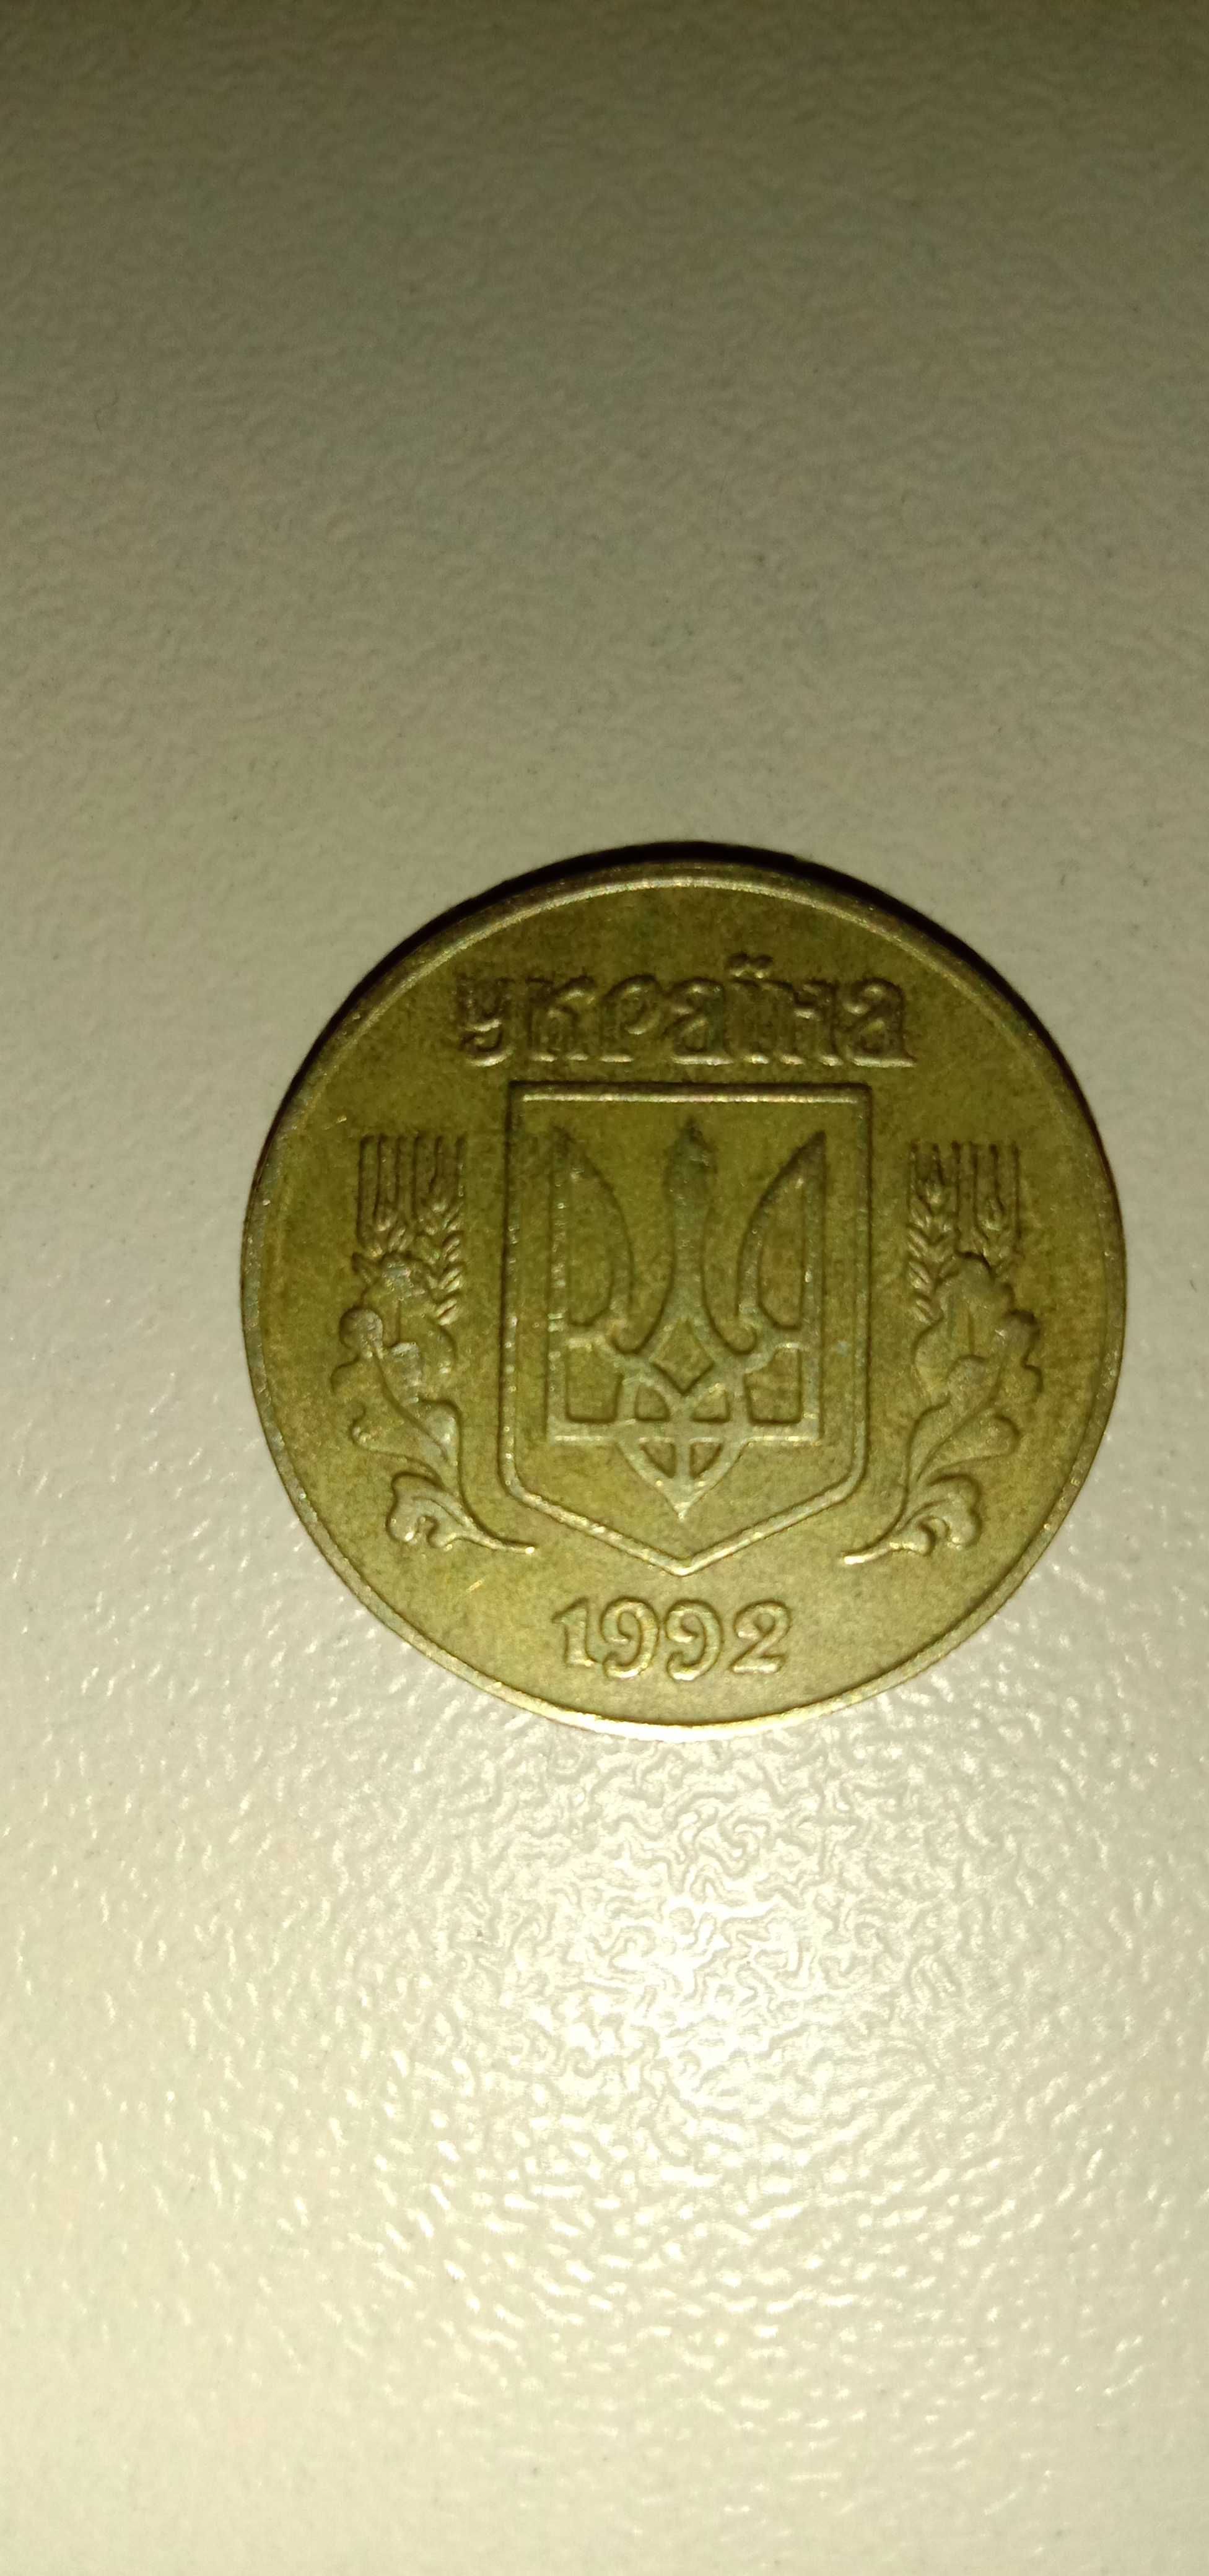 Продам редкую монету 25 копеек 1992 года